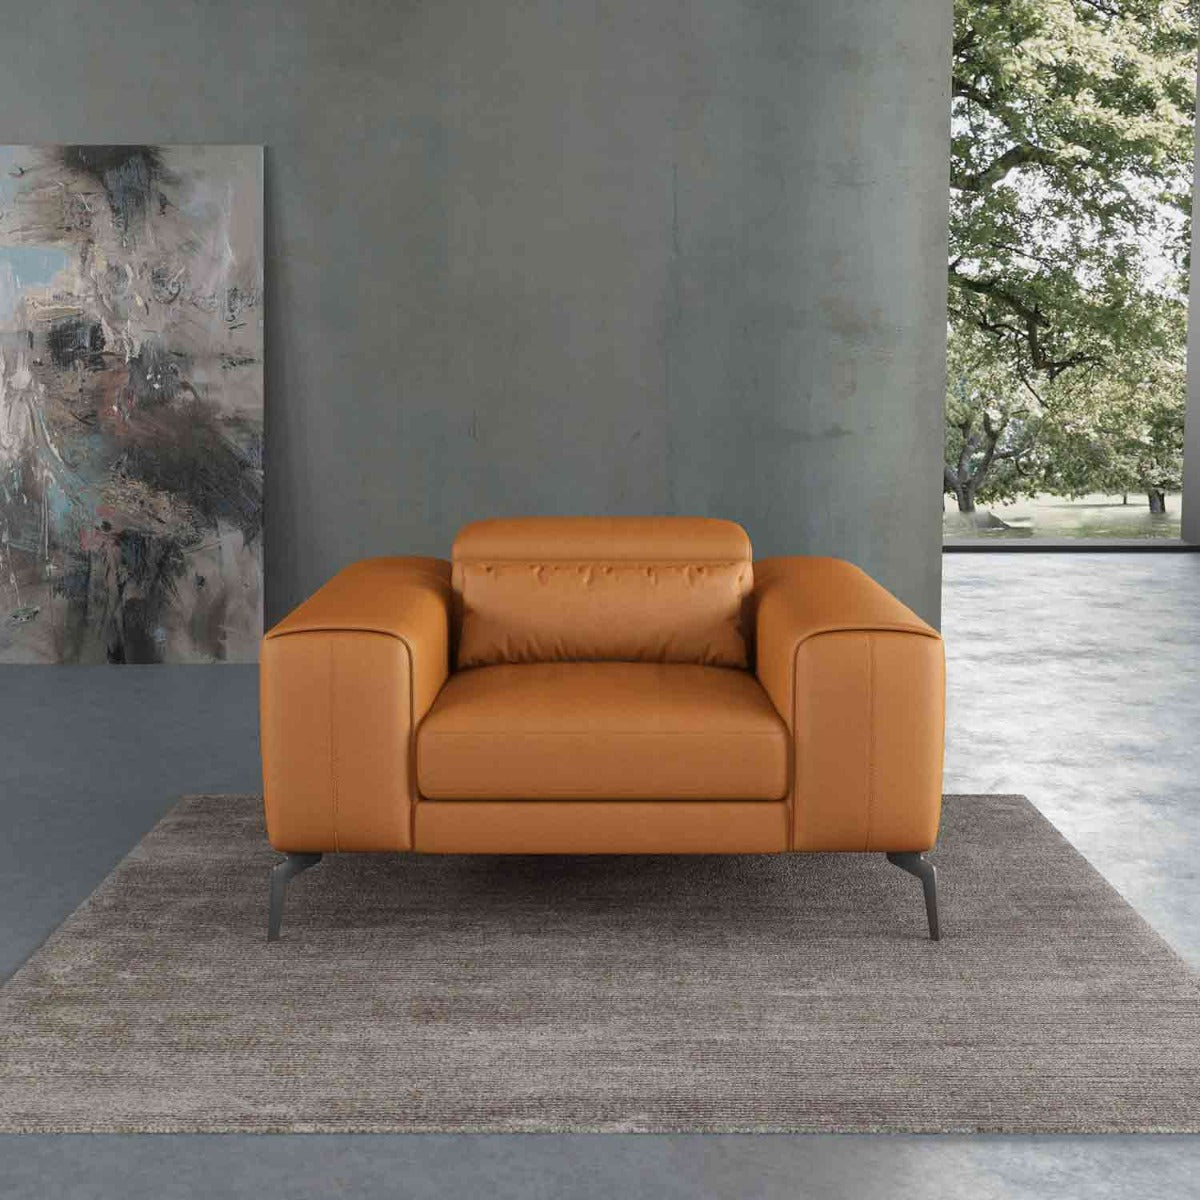 European Furniture - Cavour 3 Piece Living Room Set in Cognac - 12551-3SET - New Star Living